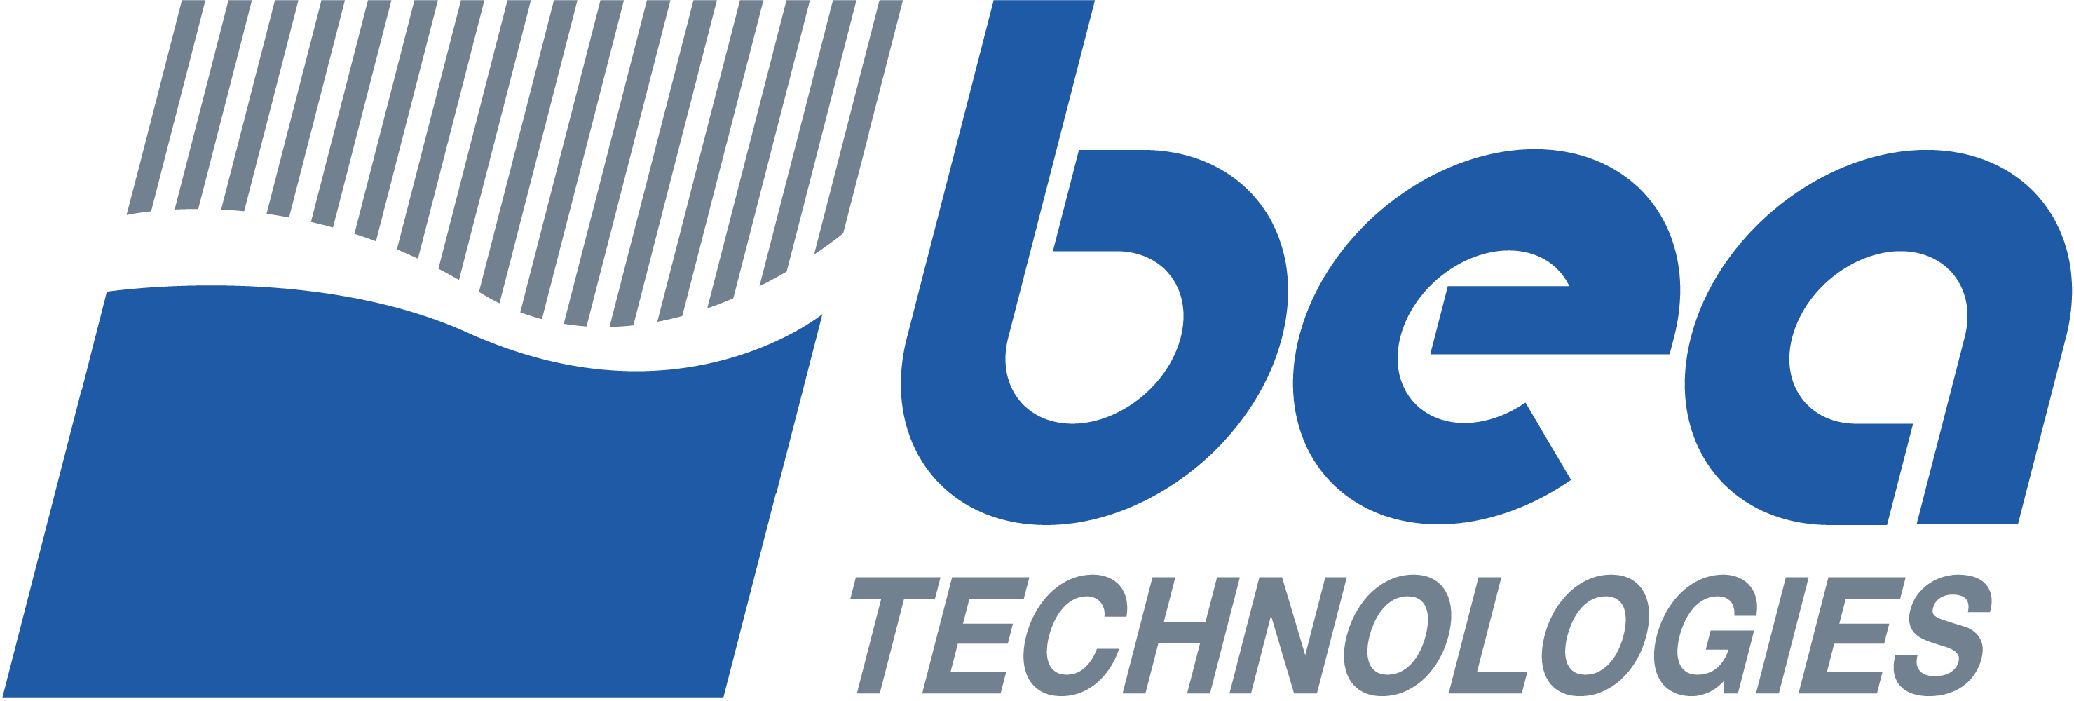 NanoFiber technology gains Excellence Award for BEA Technologies